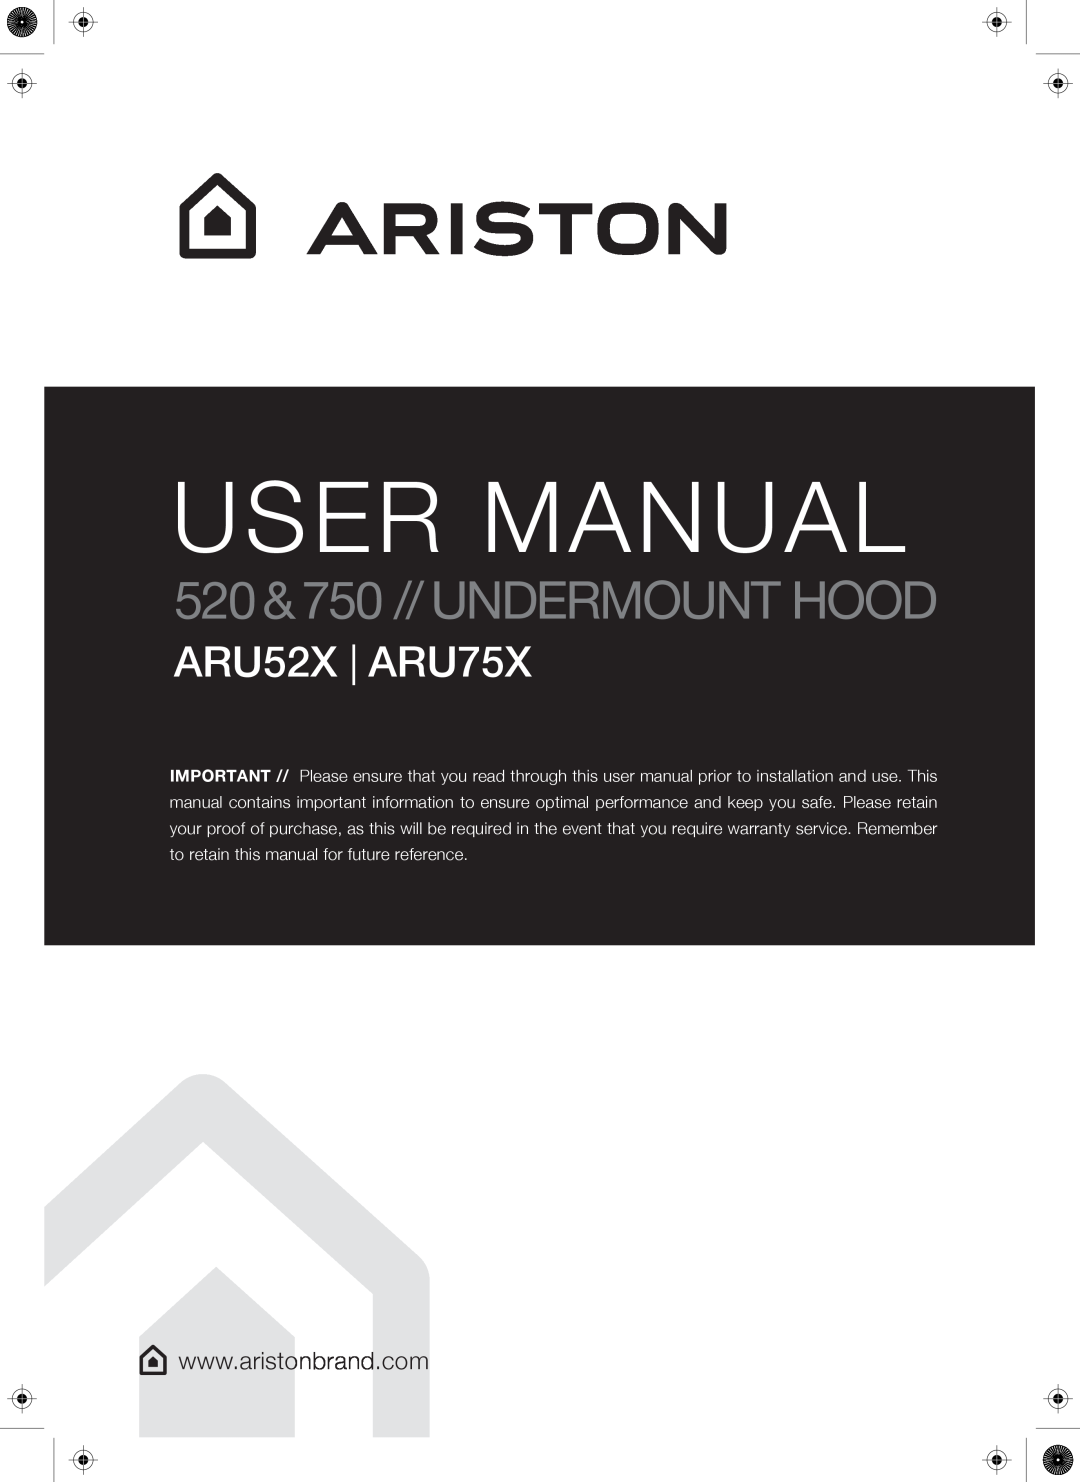 Ariston user manual 520&750 // UNDERMOUNT HOOD, ARU52X ARU75X 